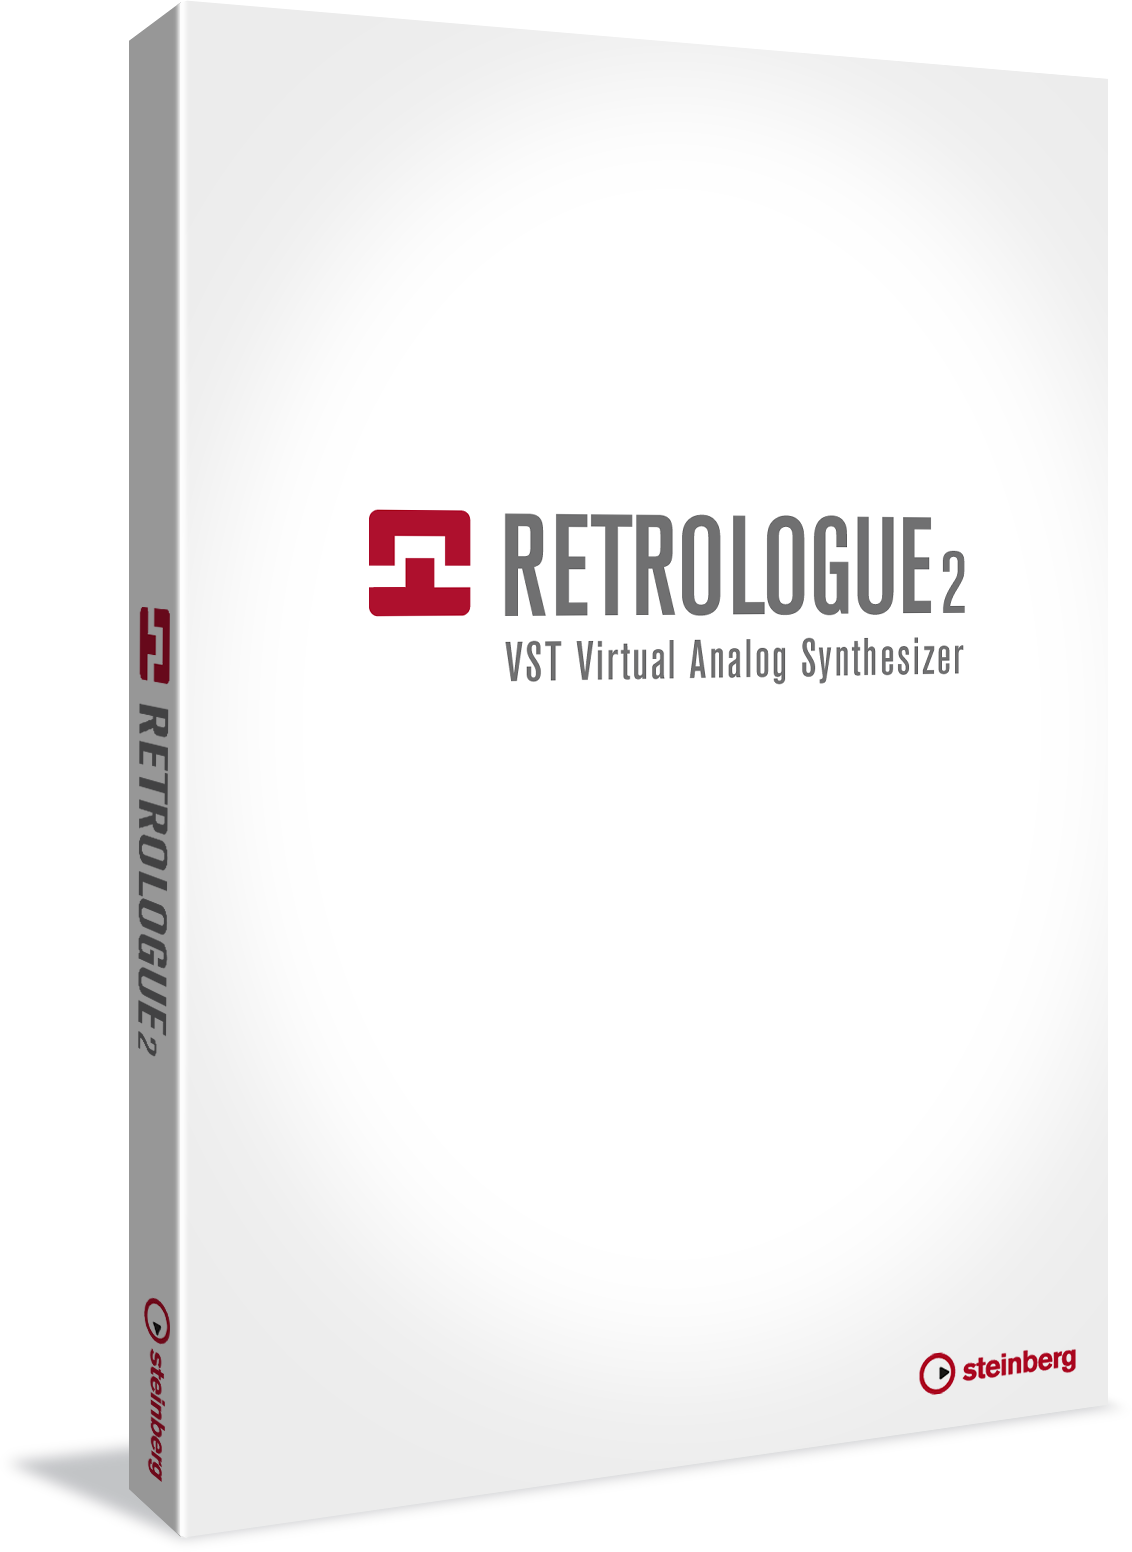 Retrologue 2 Full Version